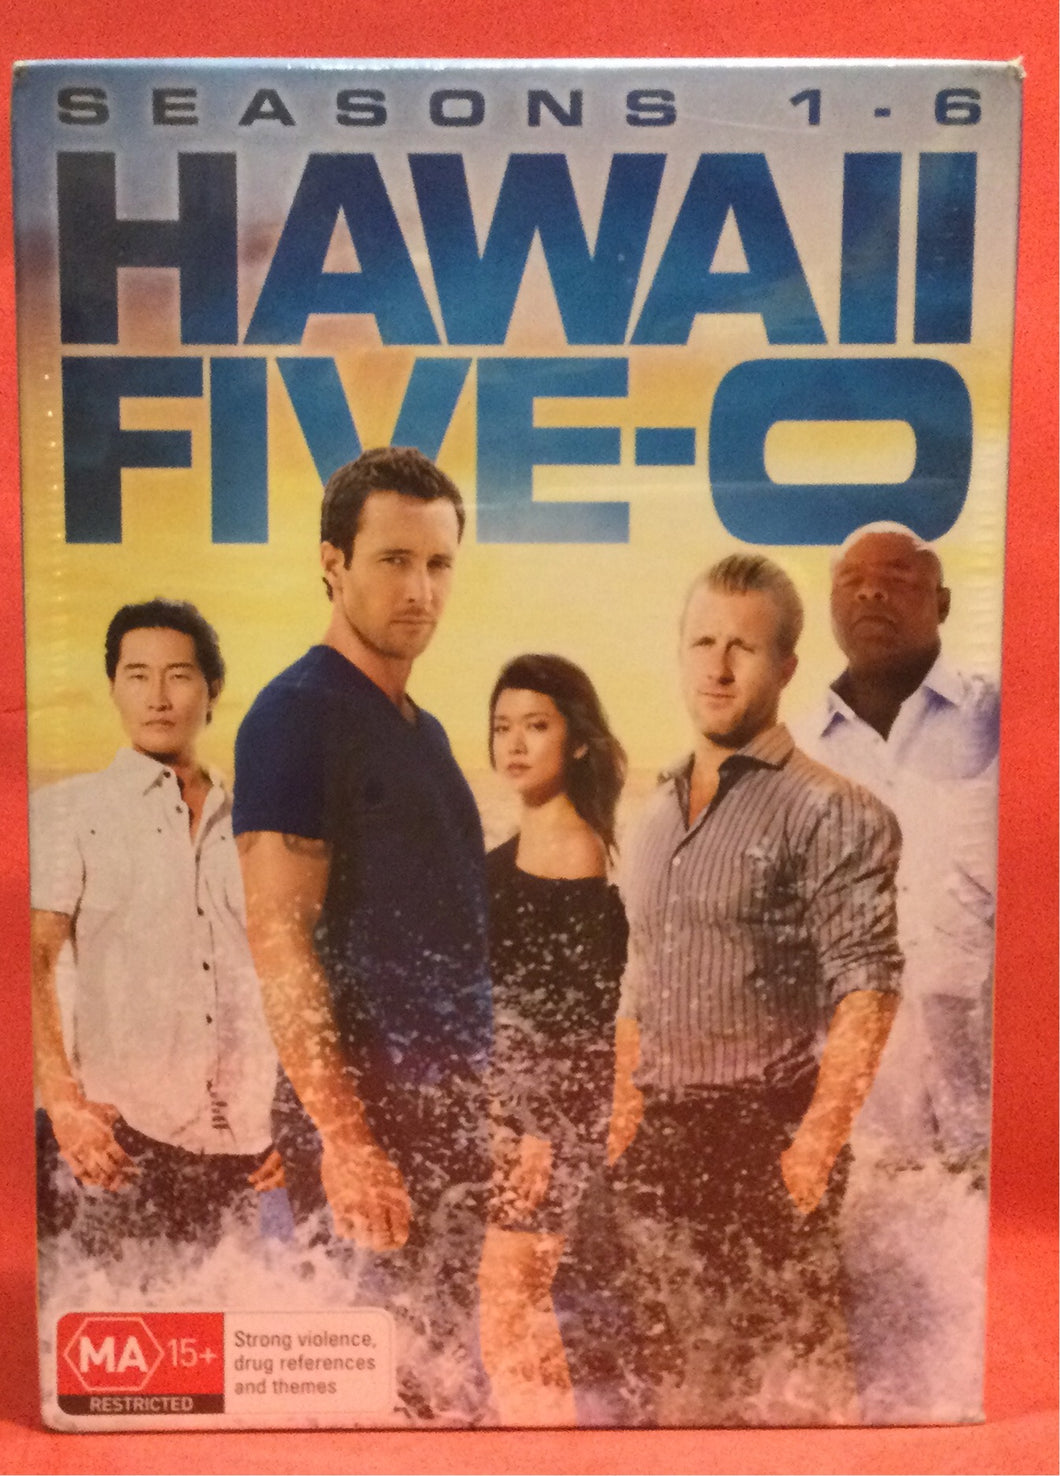 HAWAII FIVE-O - SEASONS 1-6 - 6 DVD DISCS (SEALED)